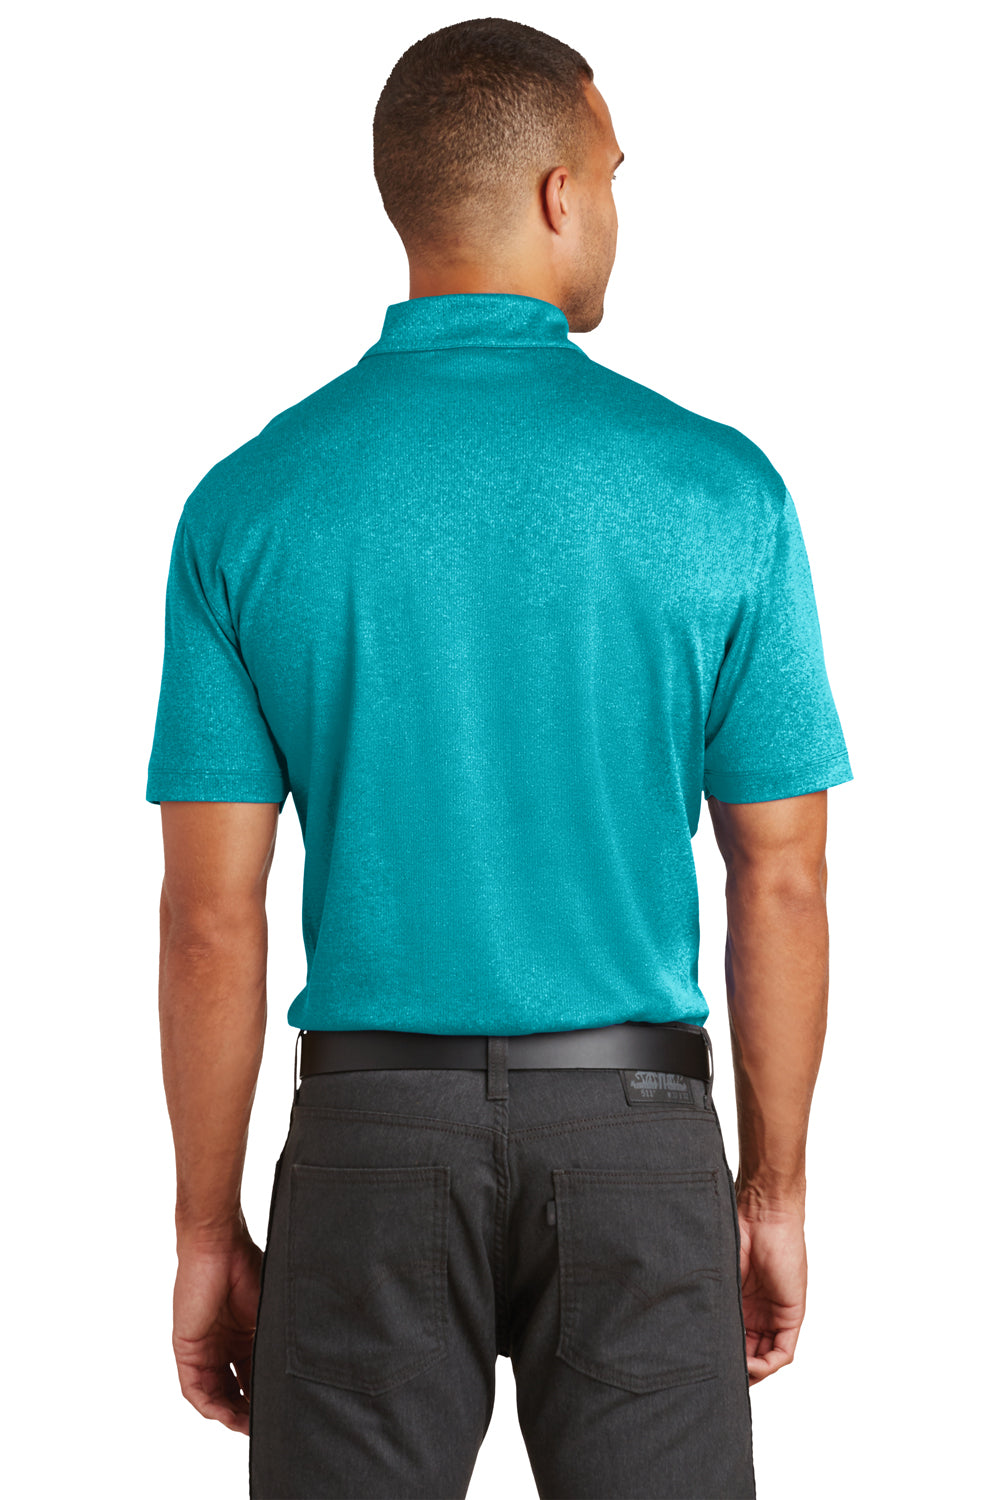 Port Authority K576 Mens Trace Moisture Wicking Short Sleeve Polo Shirt Heather Tropic Blue Back